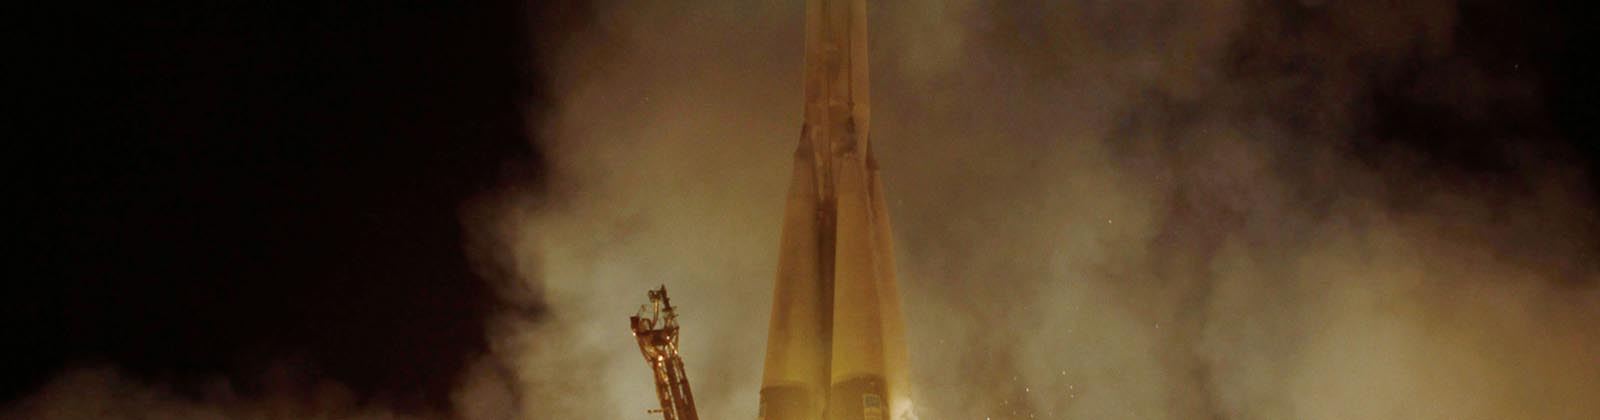 Lancement Soyuz TMA-01M